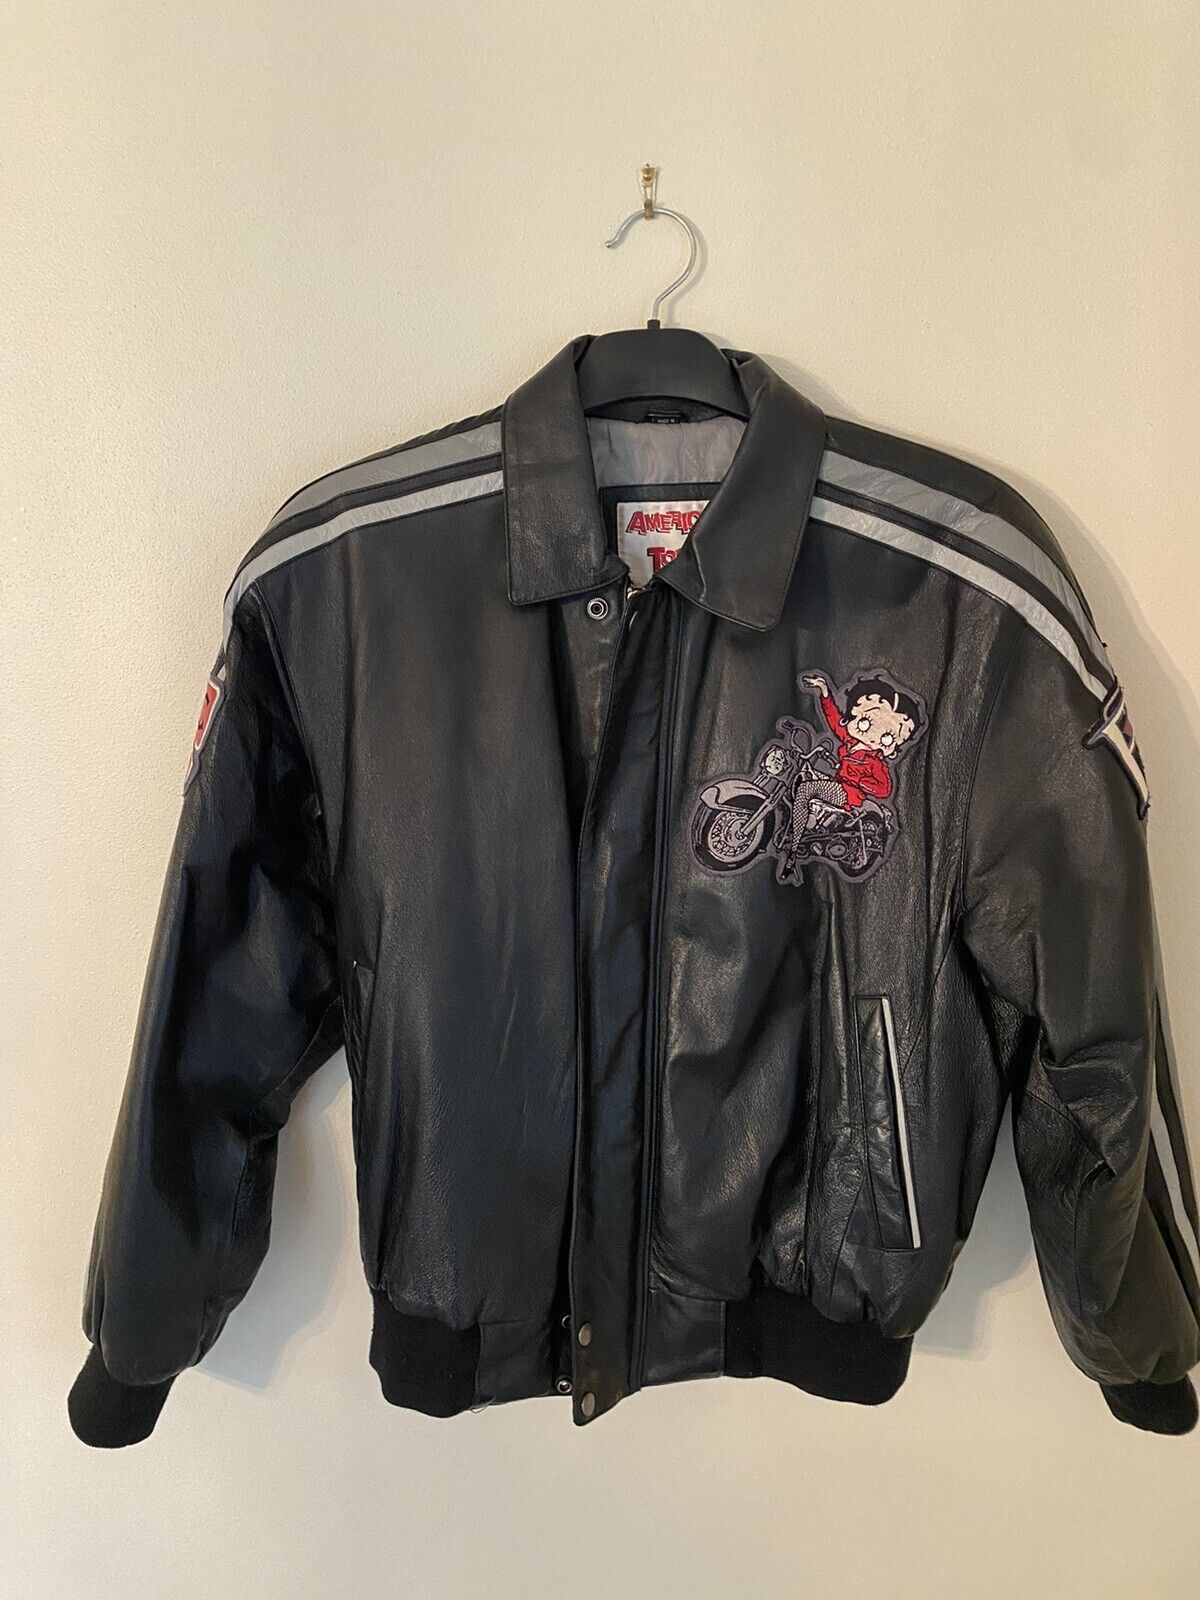 VTG Betty Boop American Toon Excelled EZ Rider Biker Leather Jacket Medium 2002